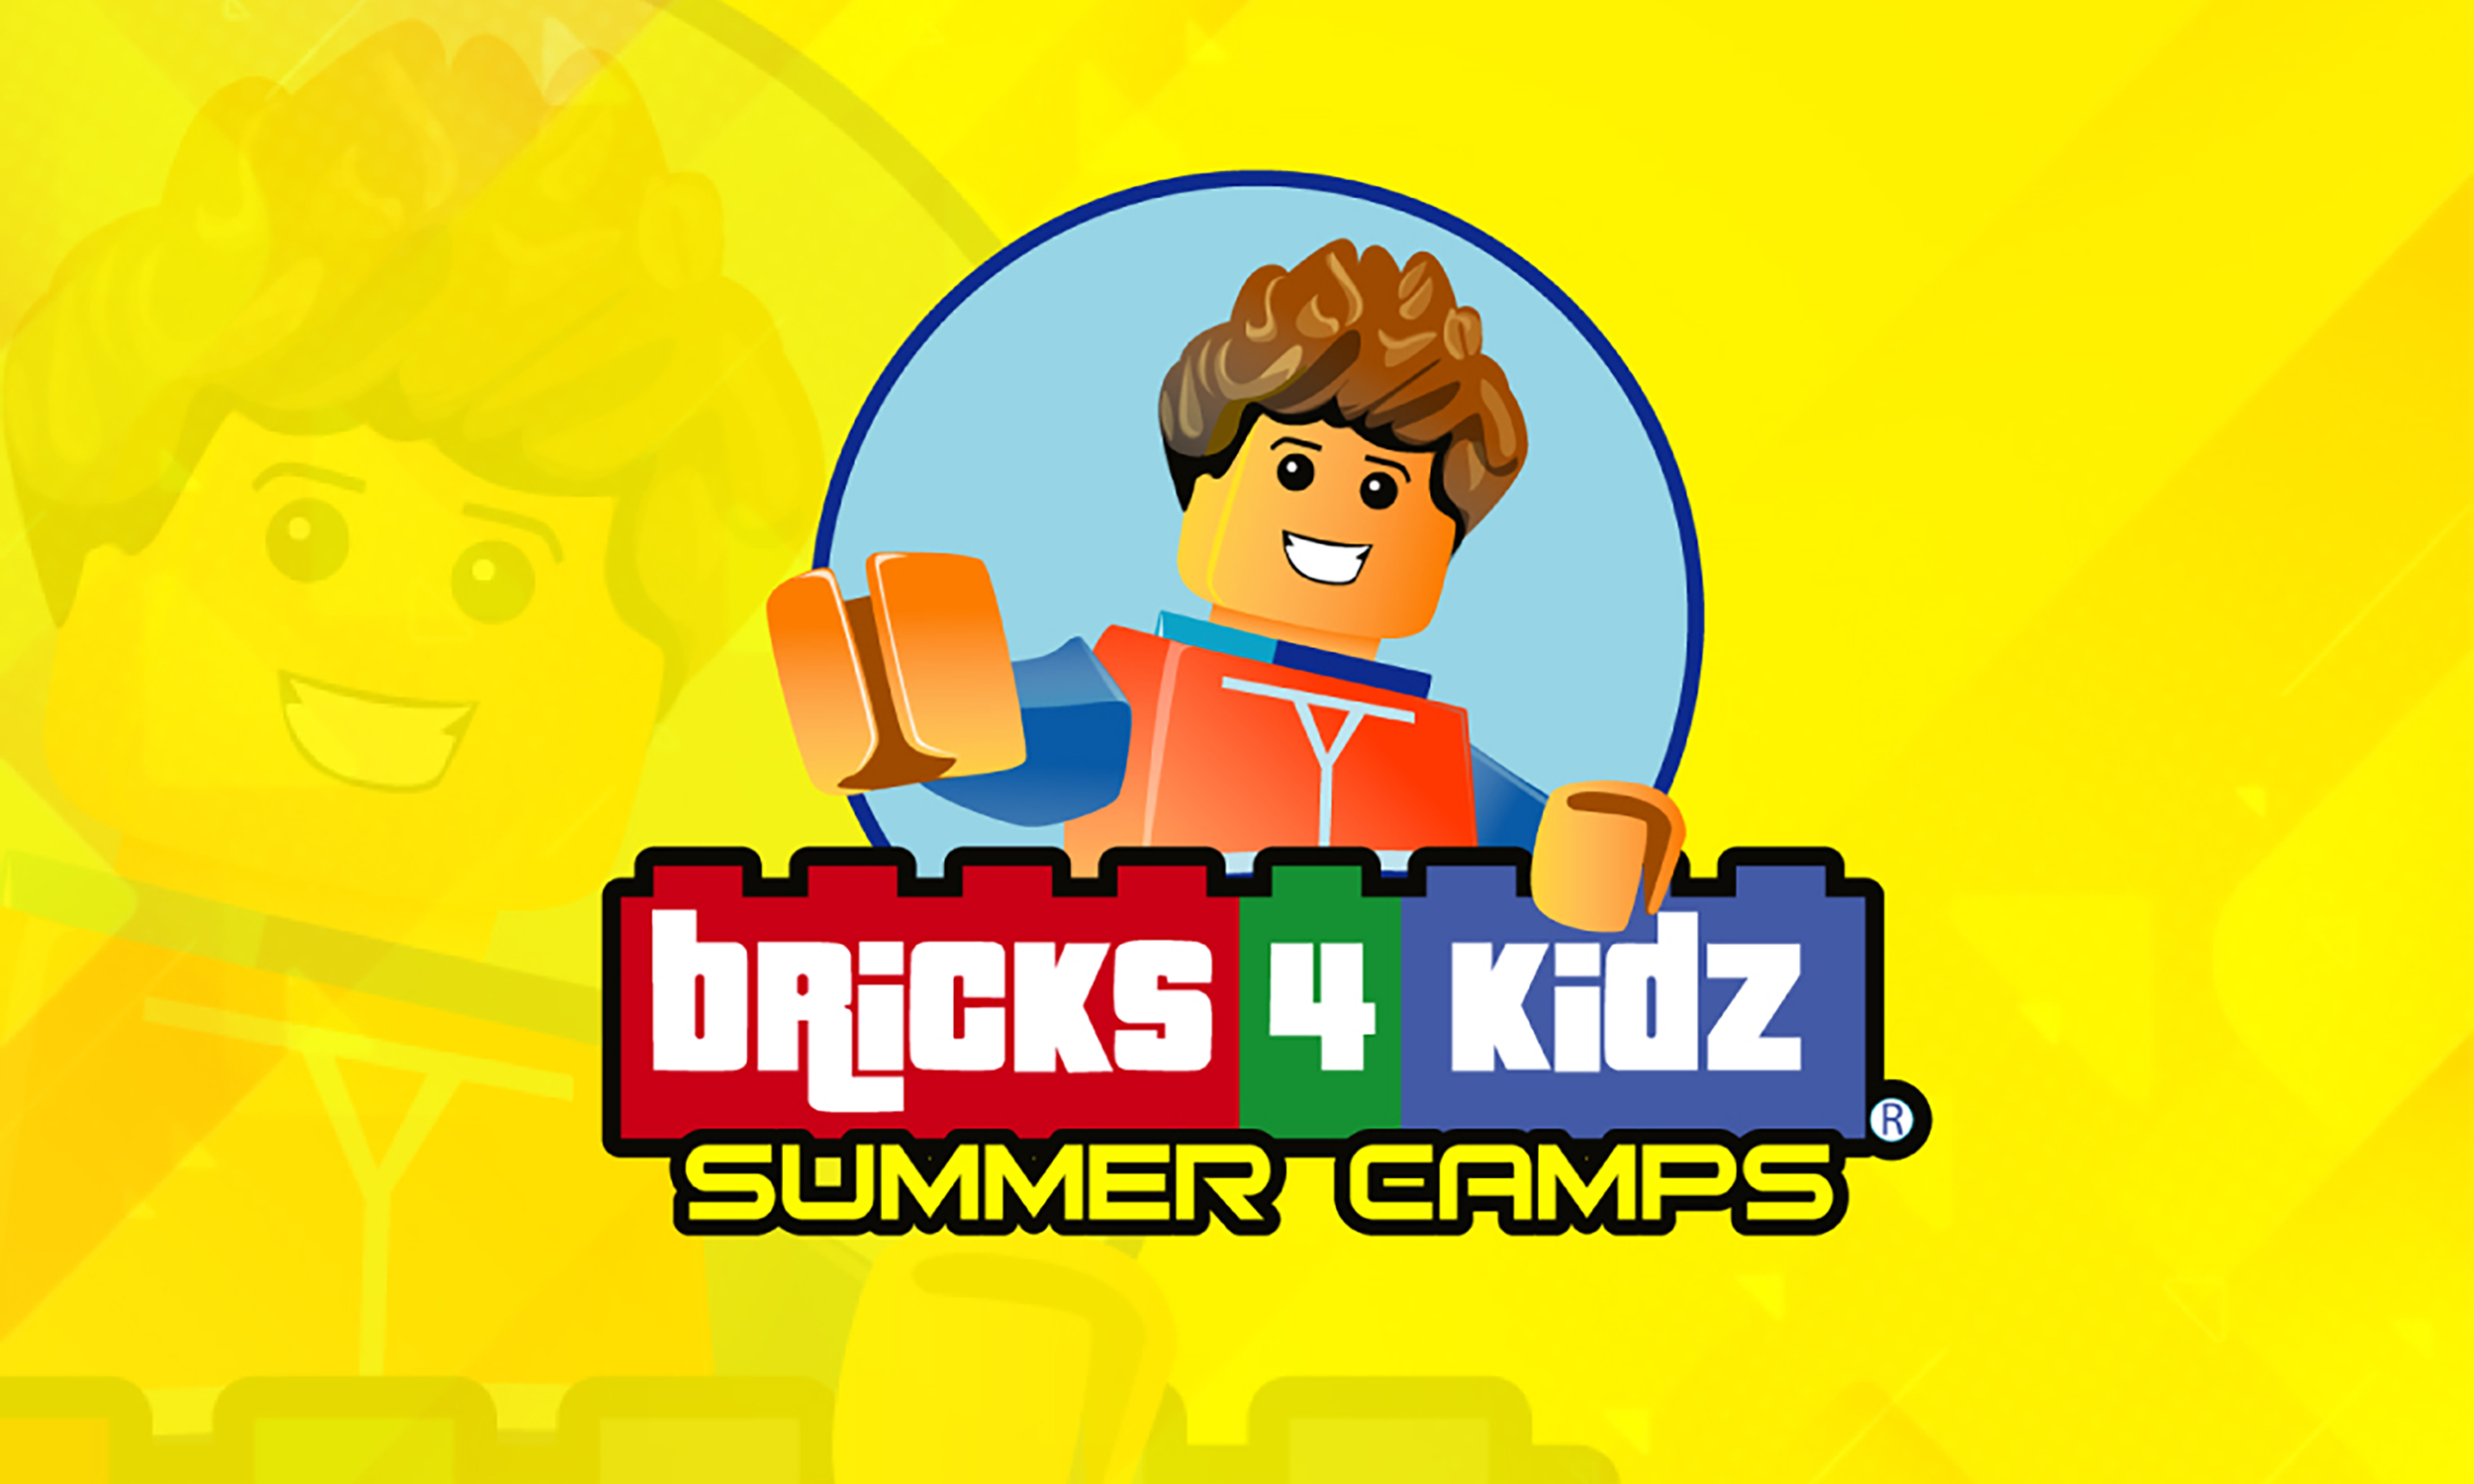 Bricks 4 Kidz Summer Camps